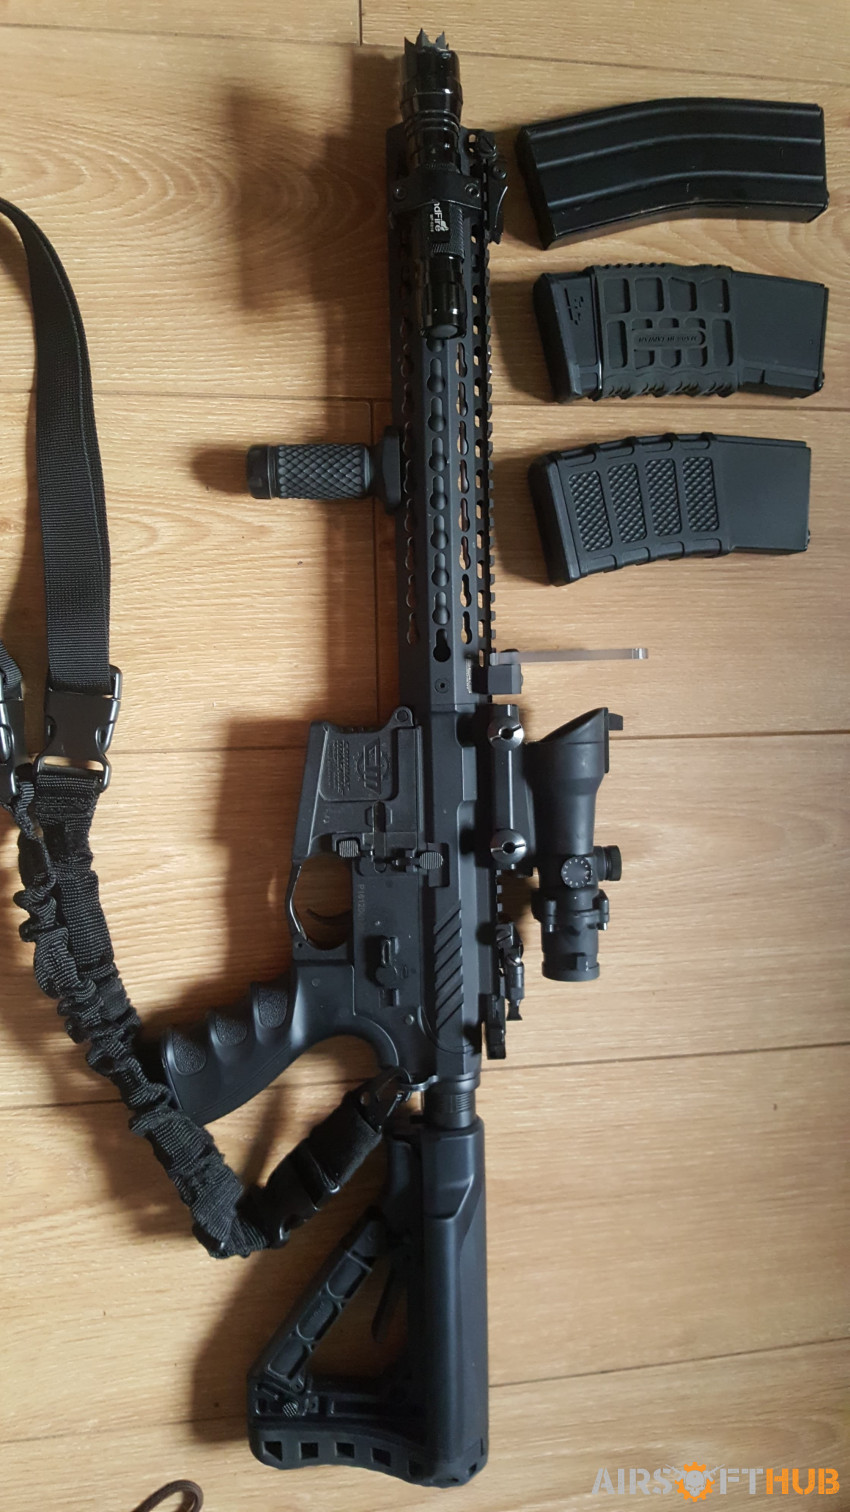 *BUNDLE* AR + Sniper w/ scope - Used airsoft equipment